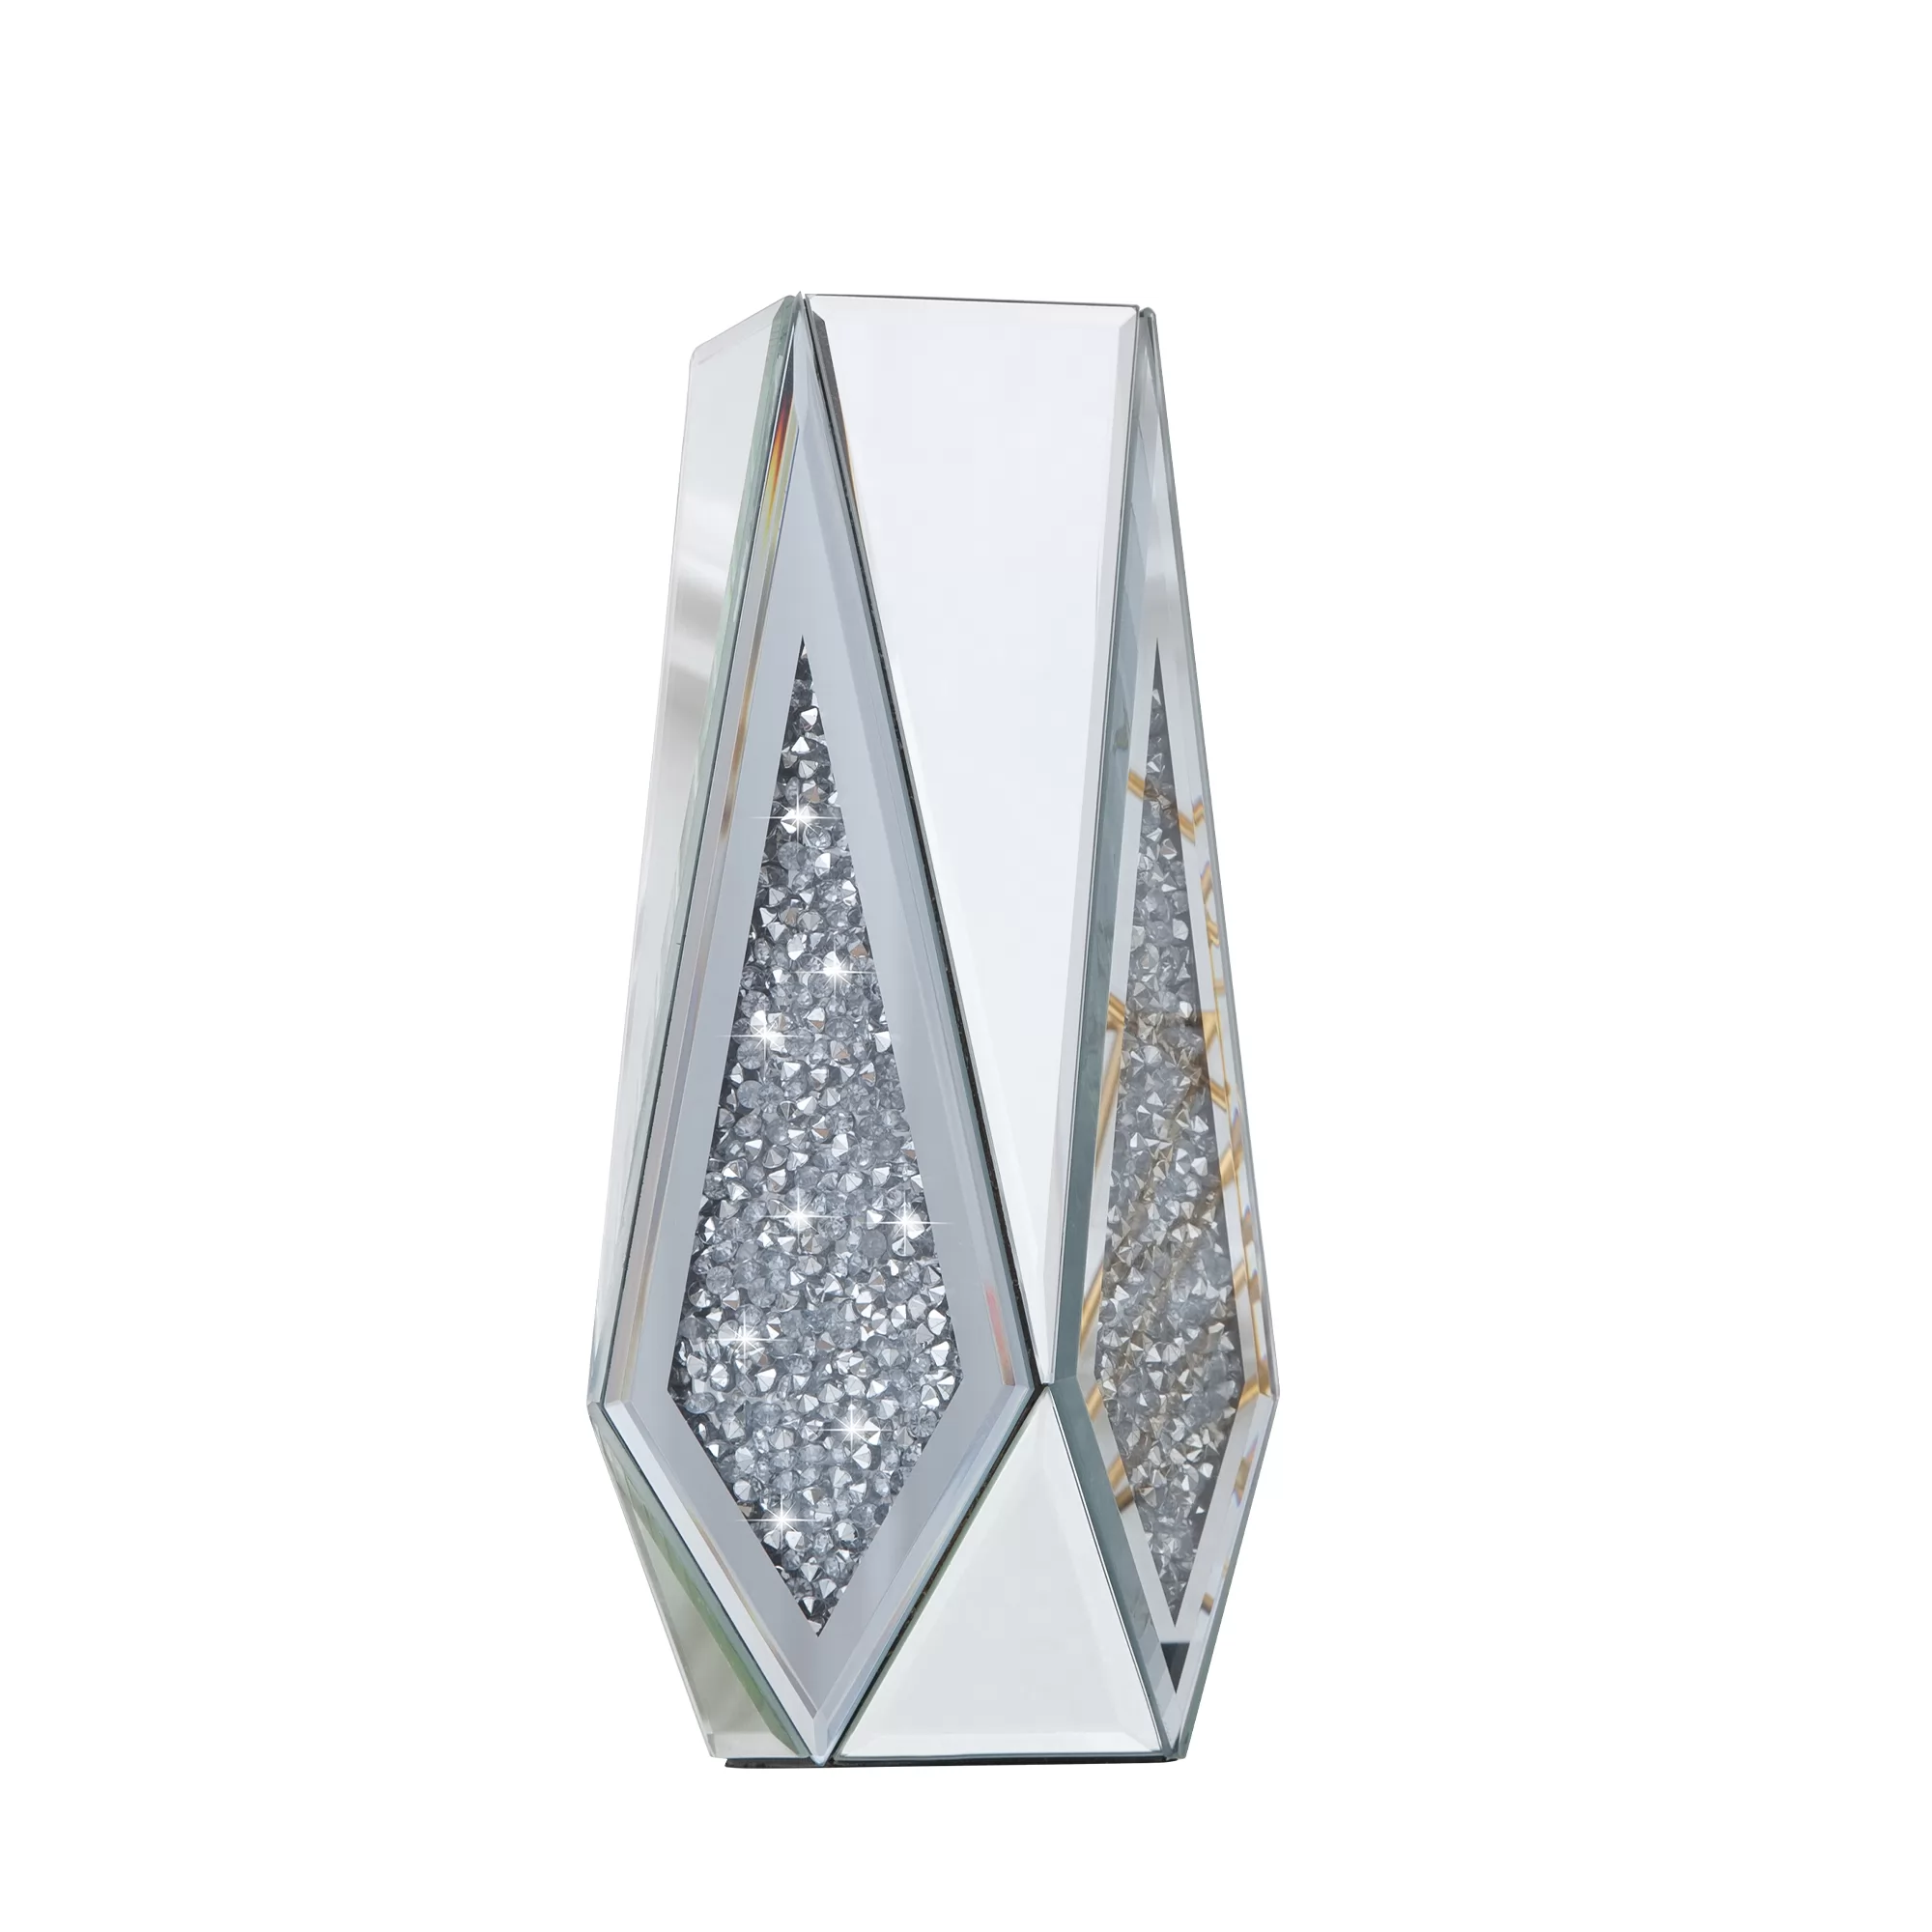 SHYFOY Crushed Diamond Mirror Vase Flower Vase, Silver Crystal Decorative Vase Glass Stunning Mirrored Vase Flower Luxury for Home Decor, Can’t Hold W